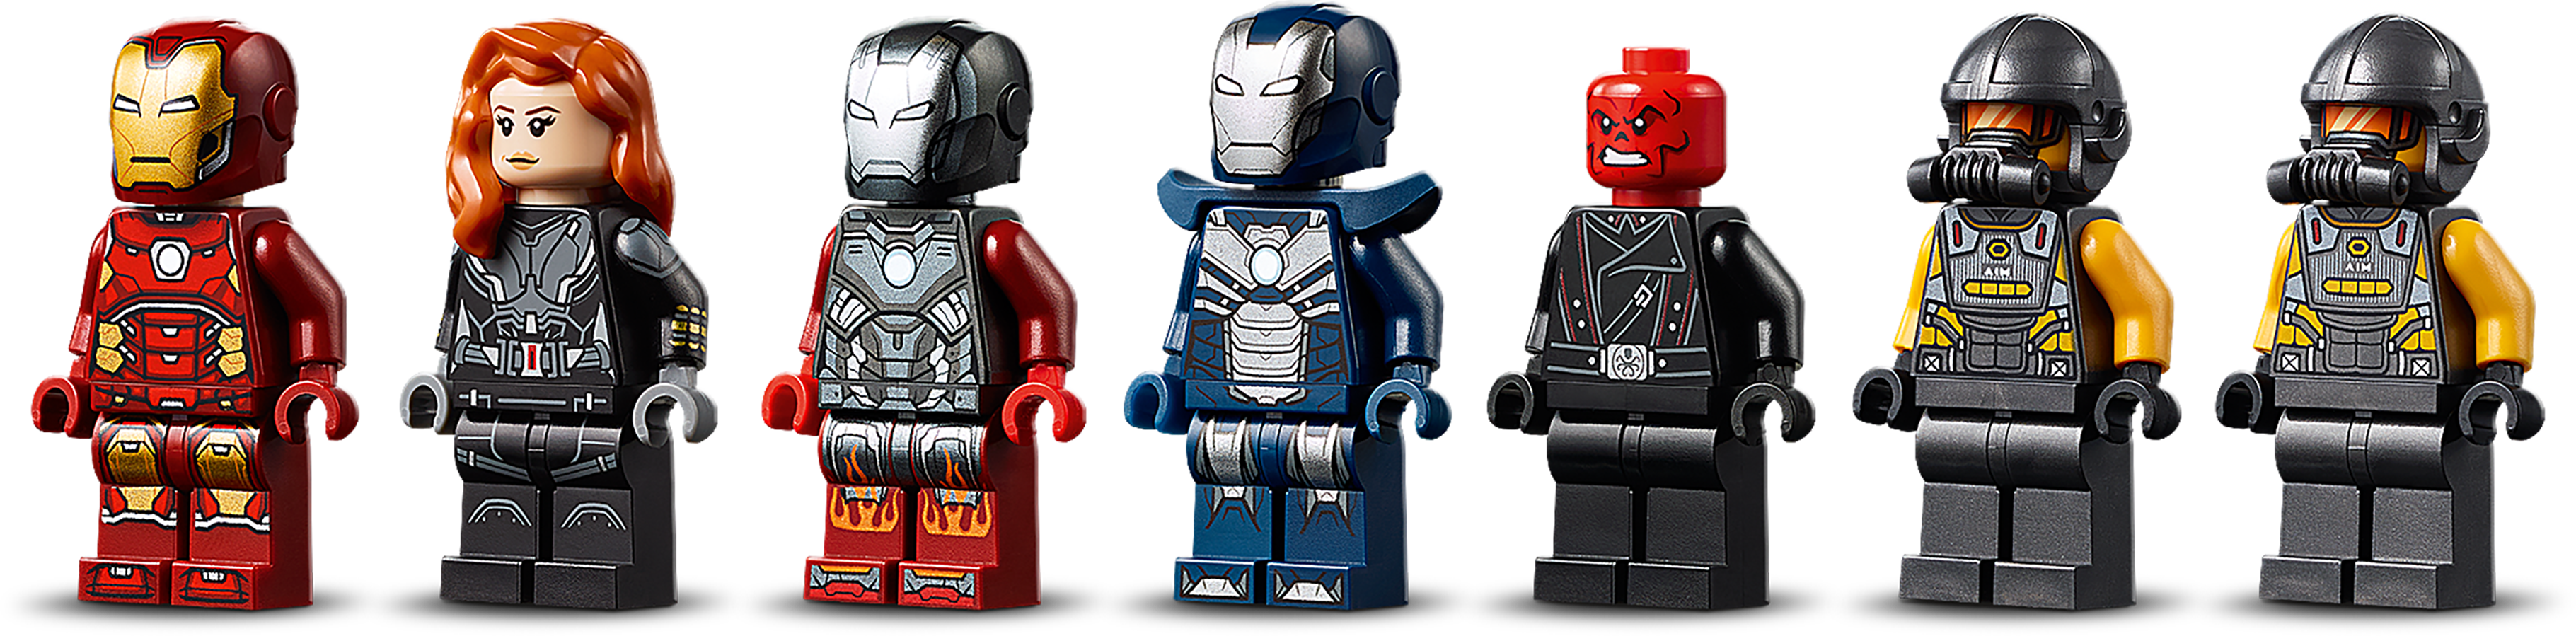 LEGO Marvel Avengers Tower Battle Set 76166 - US